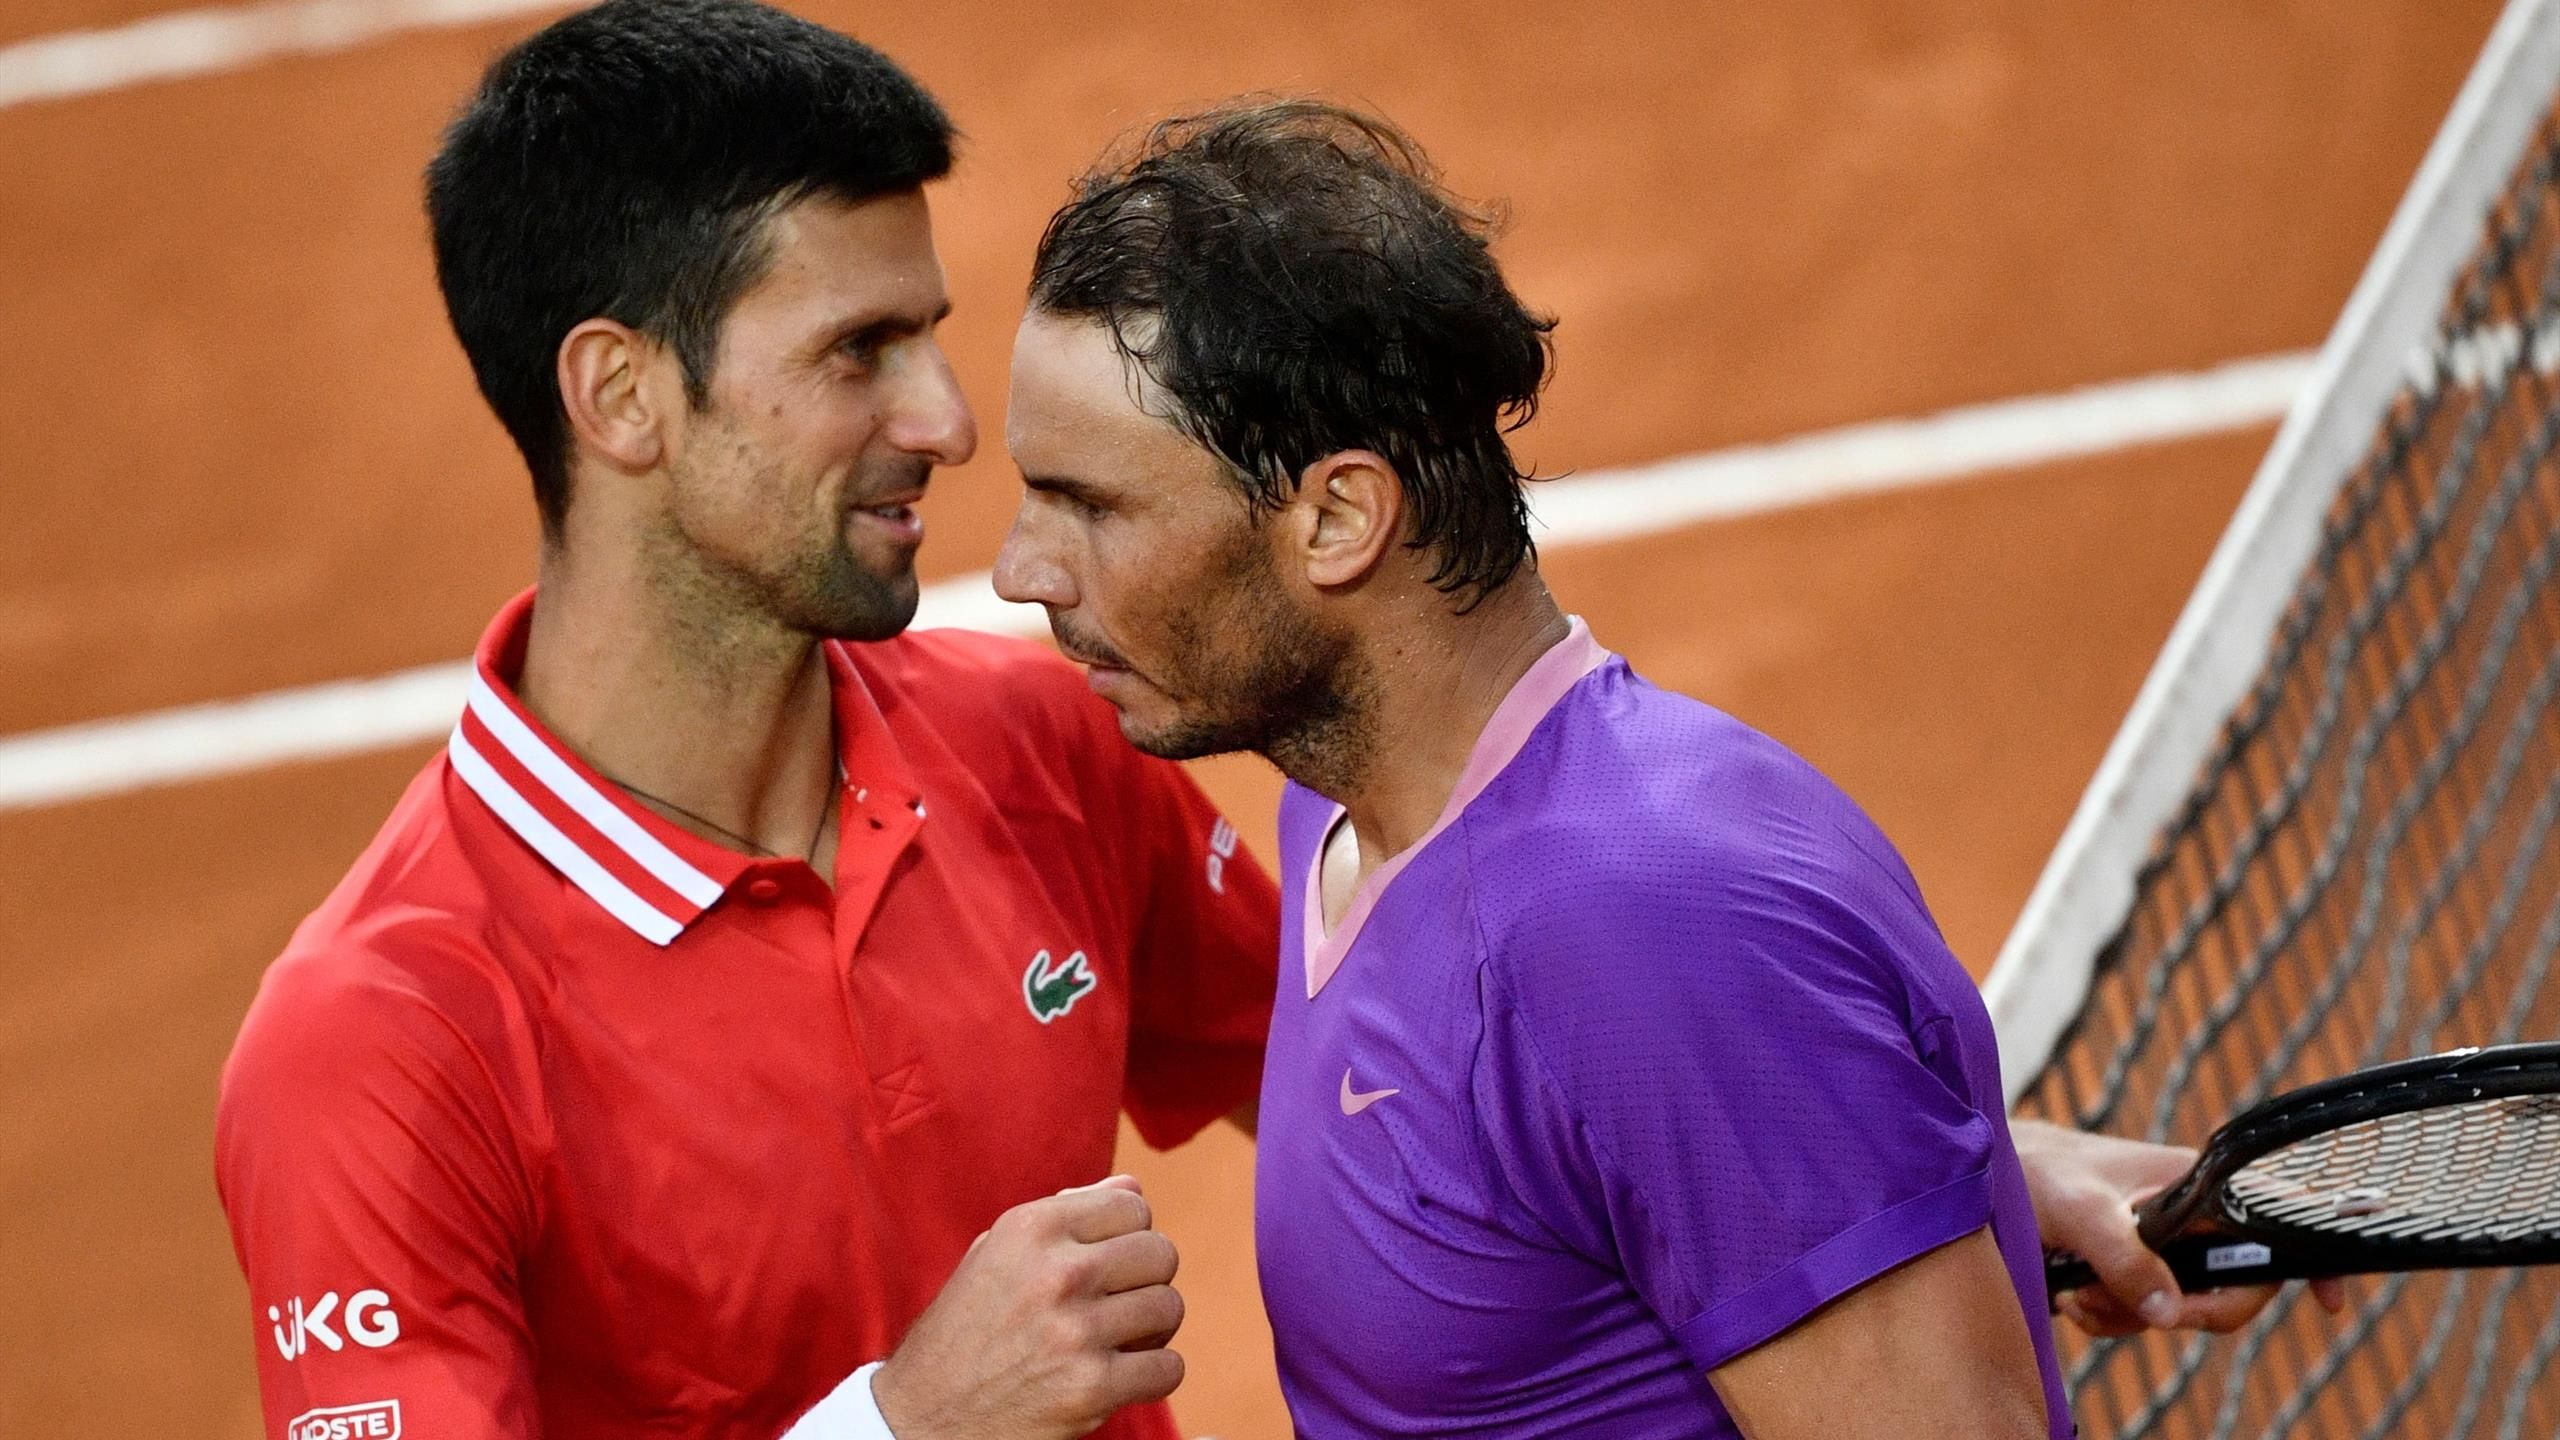 French Open 2022 - The rivalry is unbelievable - Legends react ahead of Novak Djokovic vs Rafael Nadal